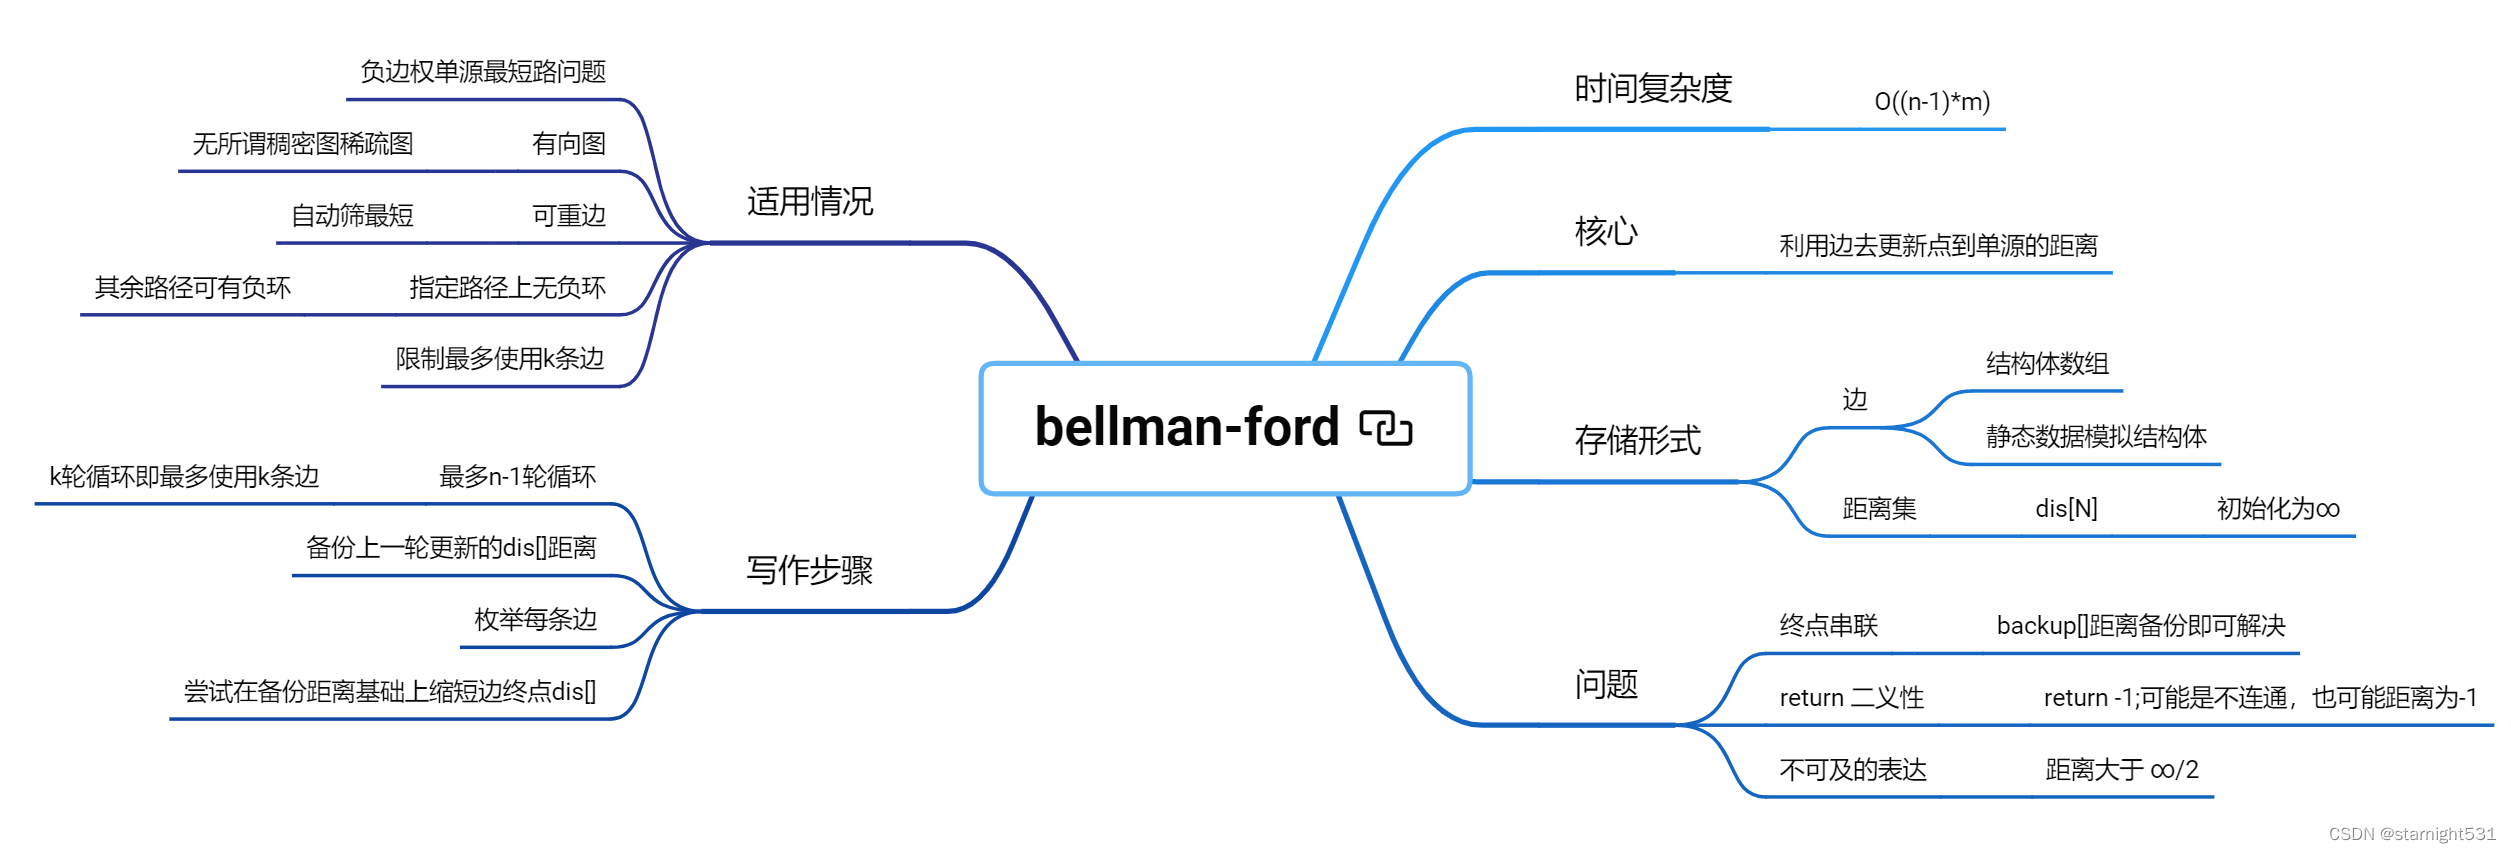 bellman-ford算法导图